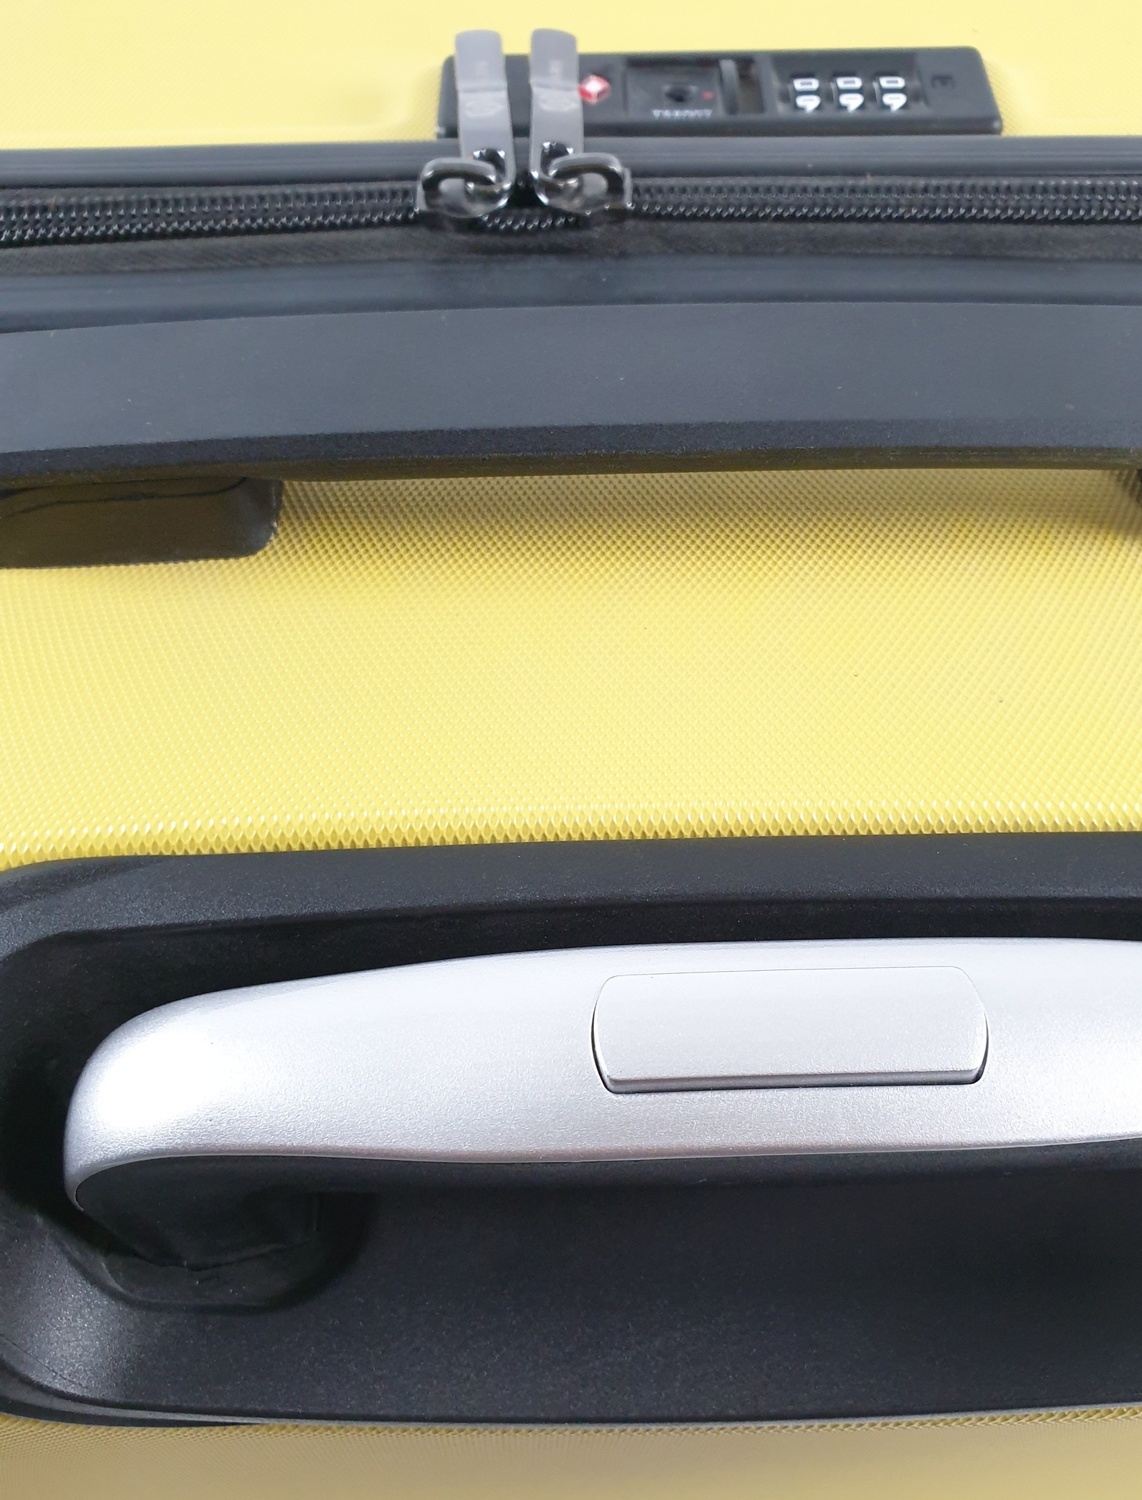 WETZLARS กระเป๋าเดินทาง ABS รุ่น CTH0011-2 ขนาด 24  สีเหลือง